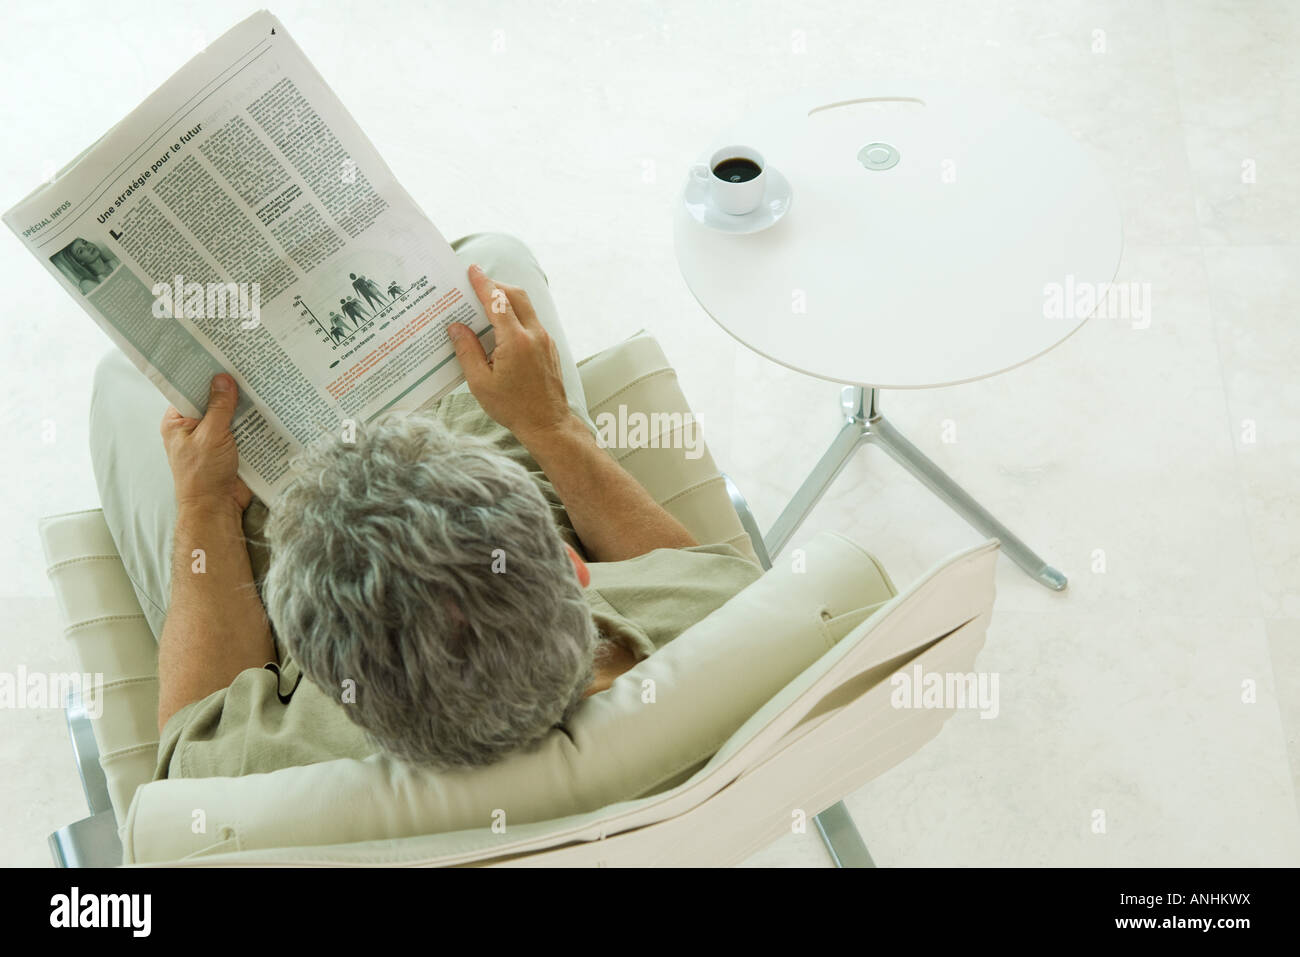 Man sitting, reading newspaper, high angle view Stock Photo